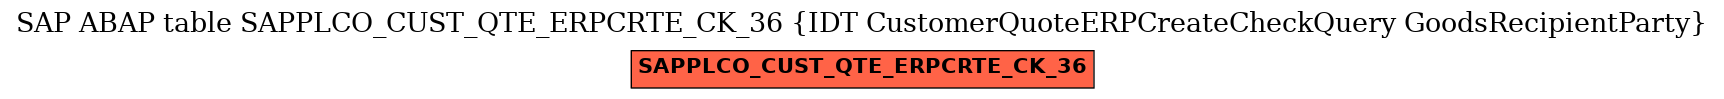 E-R Diagram for table SAPPLCO_CUST_QTE_ERPCRTE_CK_36 (IDT CustomerQuoteERPCreateCheckQuery GoodsRecipientParty)